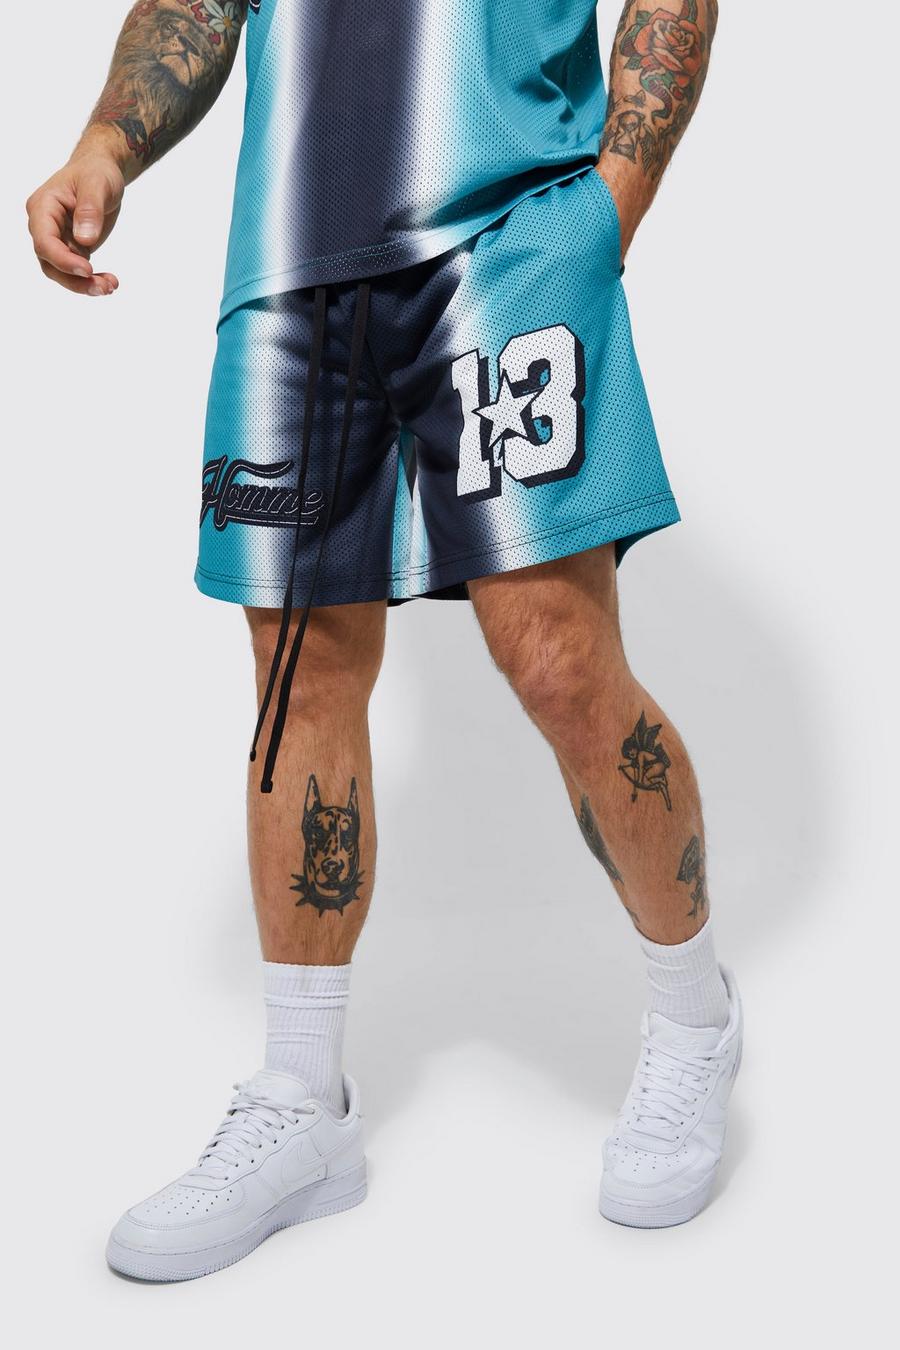 Pantaloncini da basket Homme in rete con stampa sfumata, Teal green